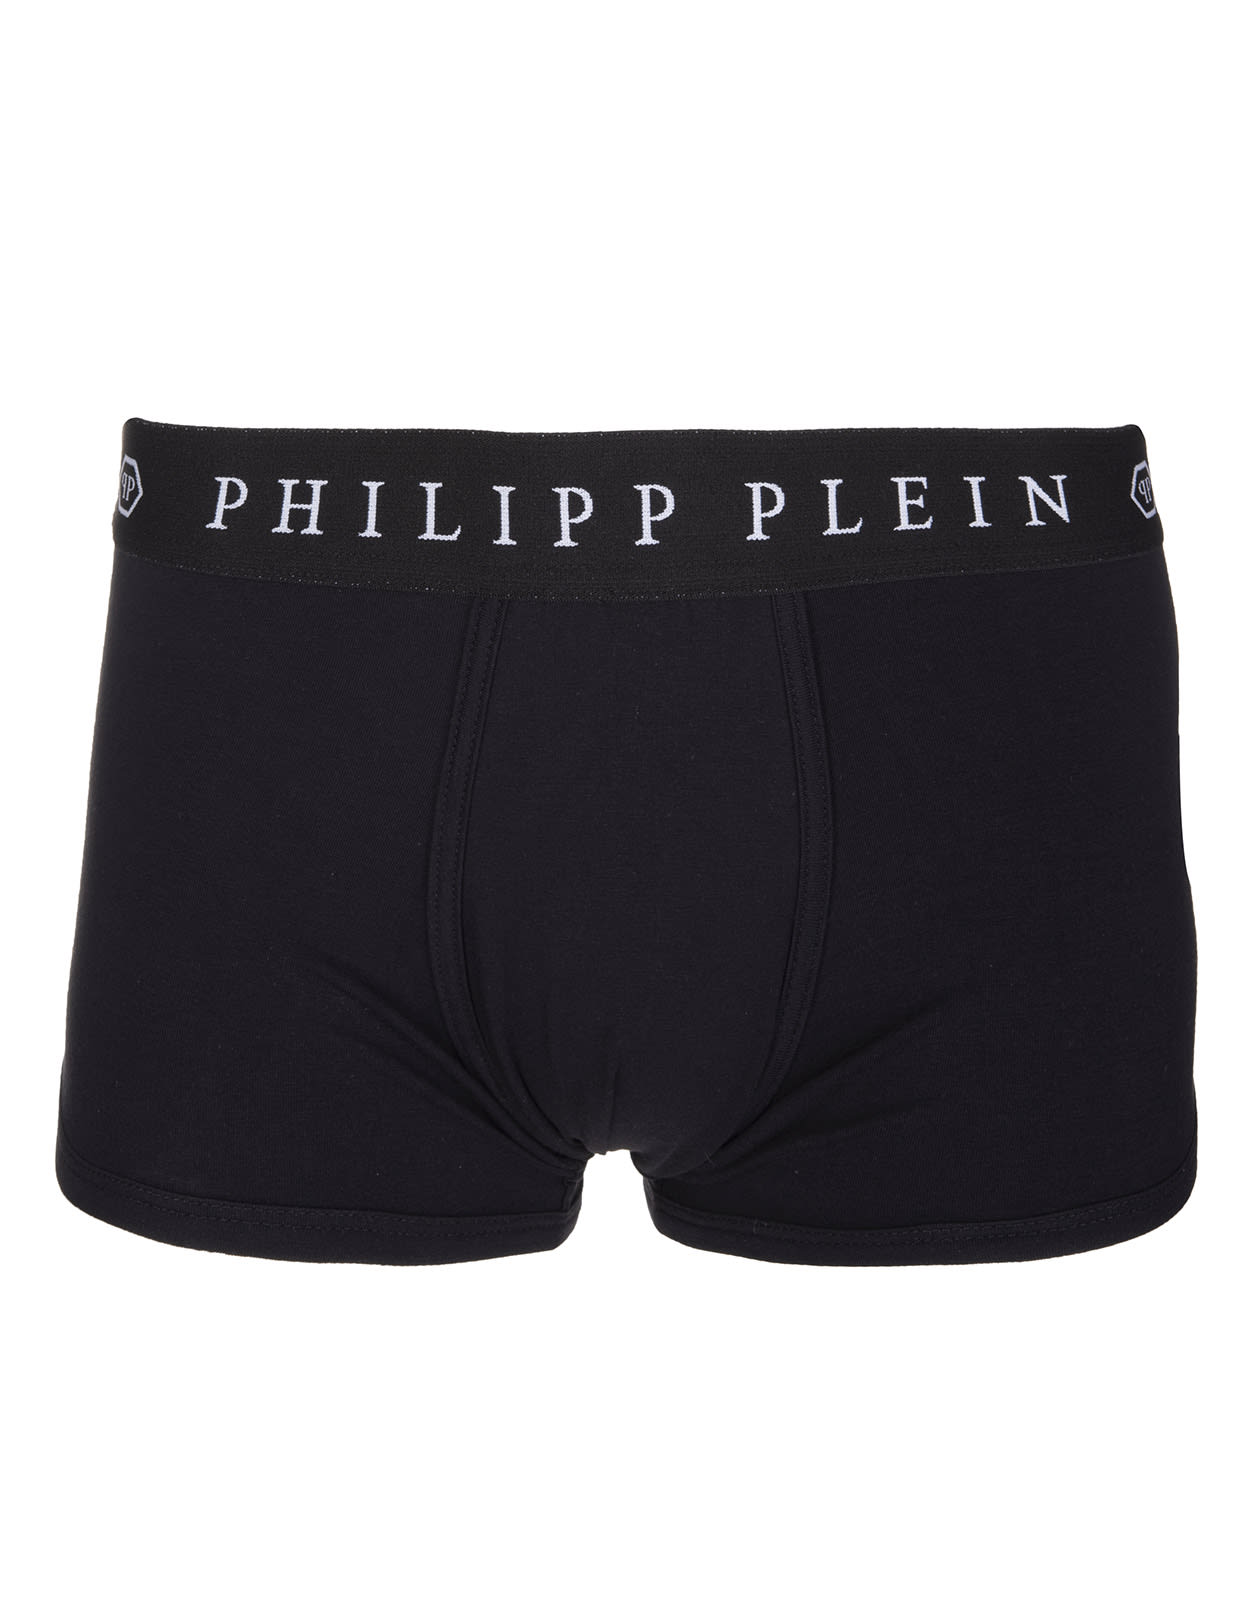 Philipp Plein Black Monogram Boxer Shorts